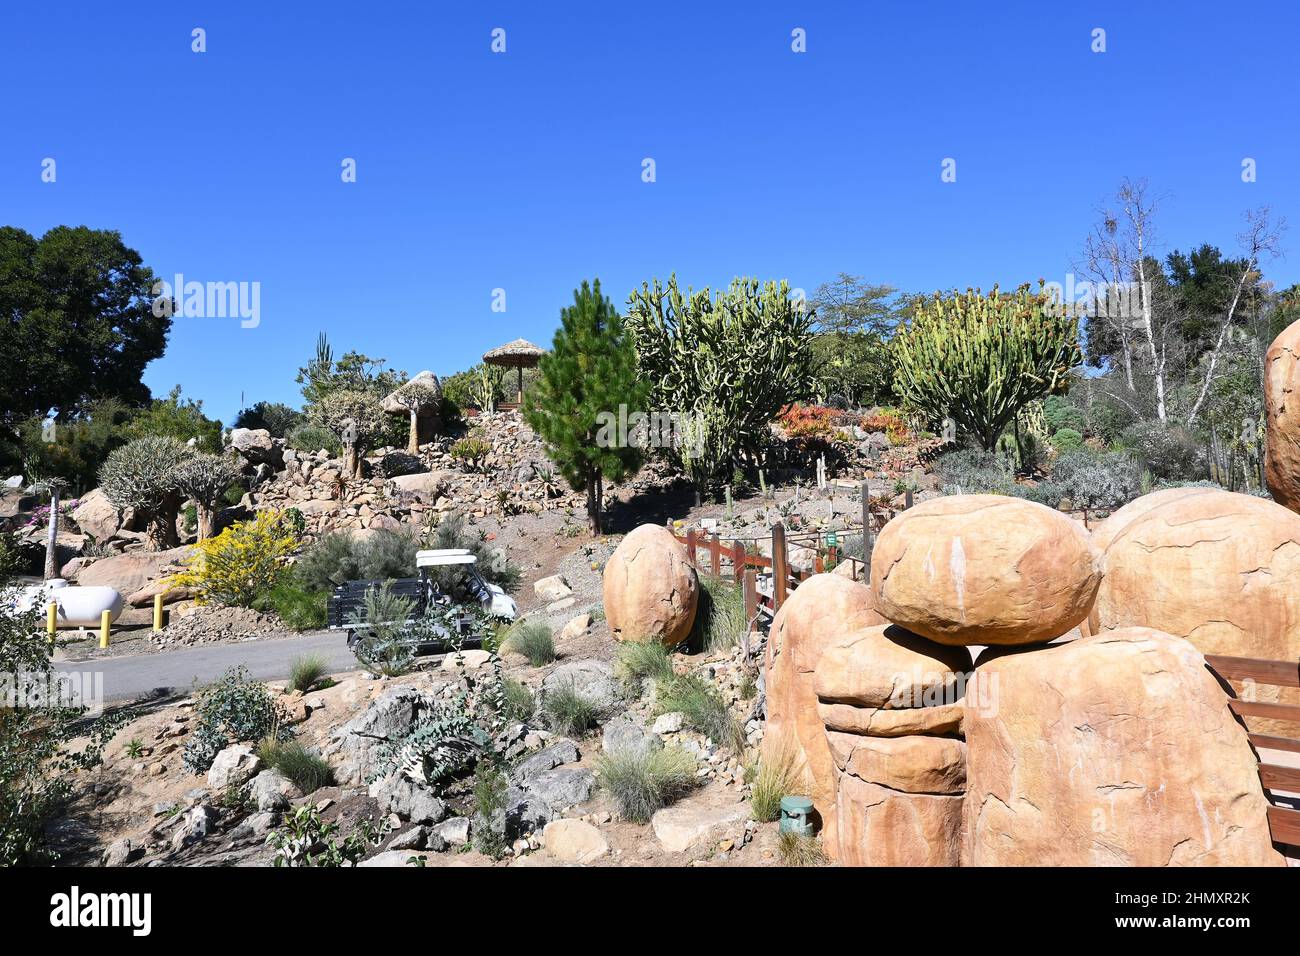 ESCONDIDO, CALIF - 9 FEB 2022: The Old World Succulent Garden at the San Diego Zoo Safari Park Stock Photo